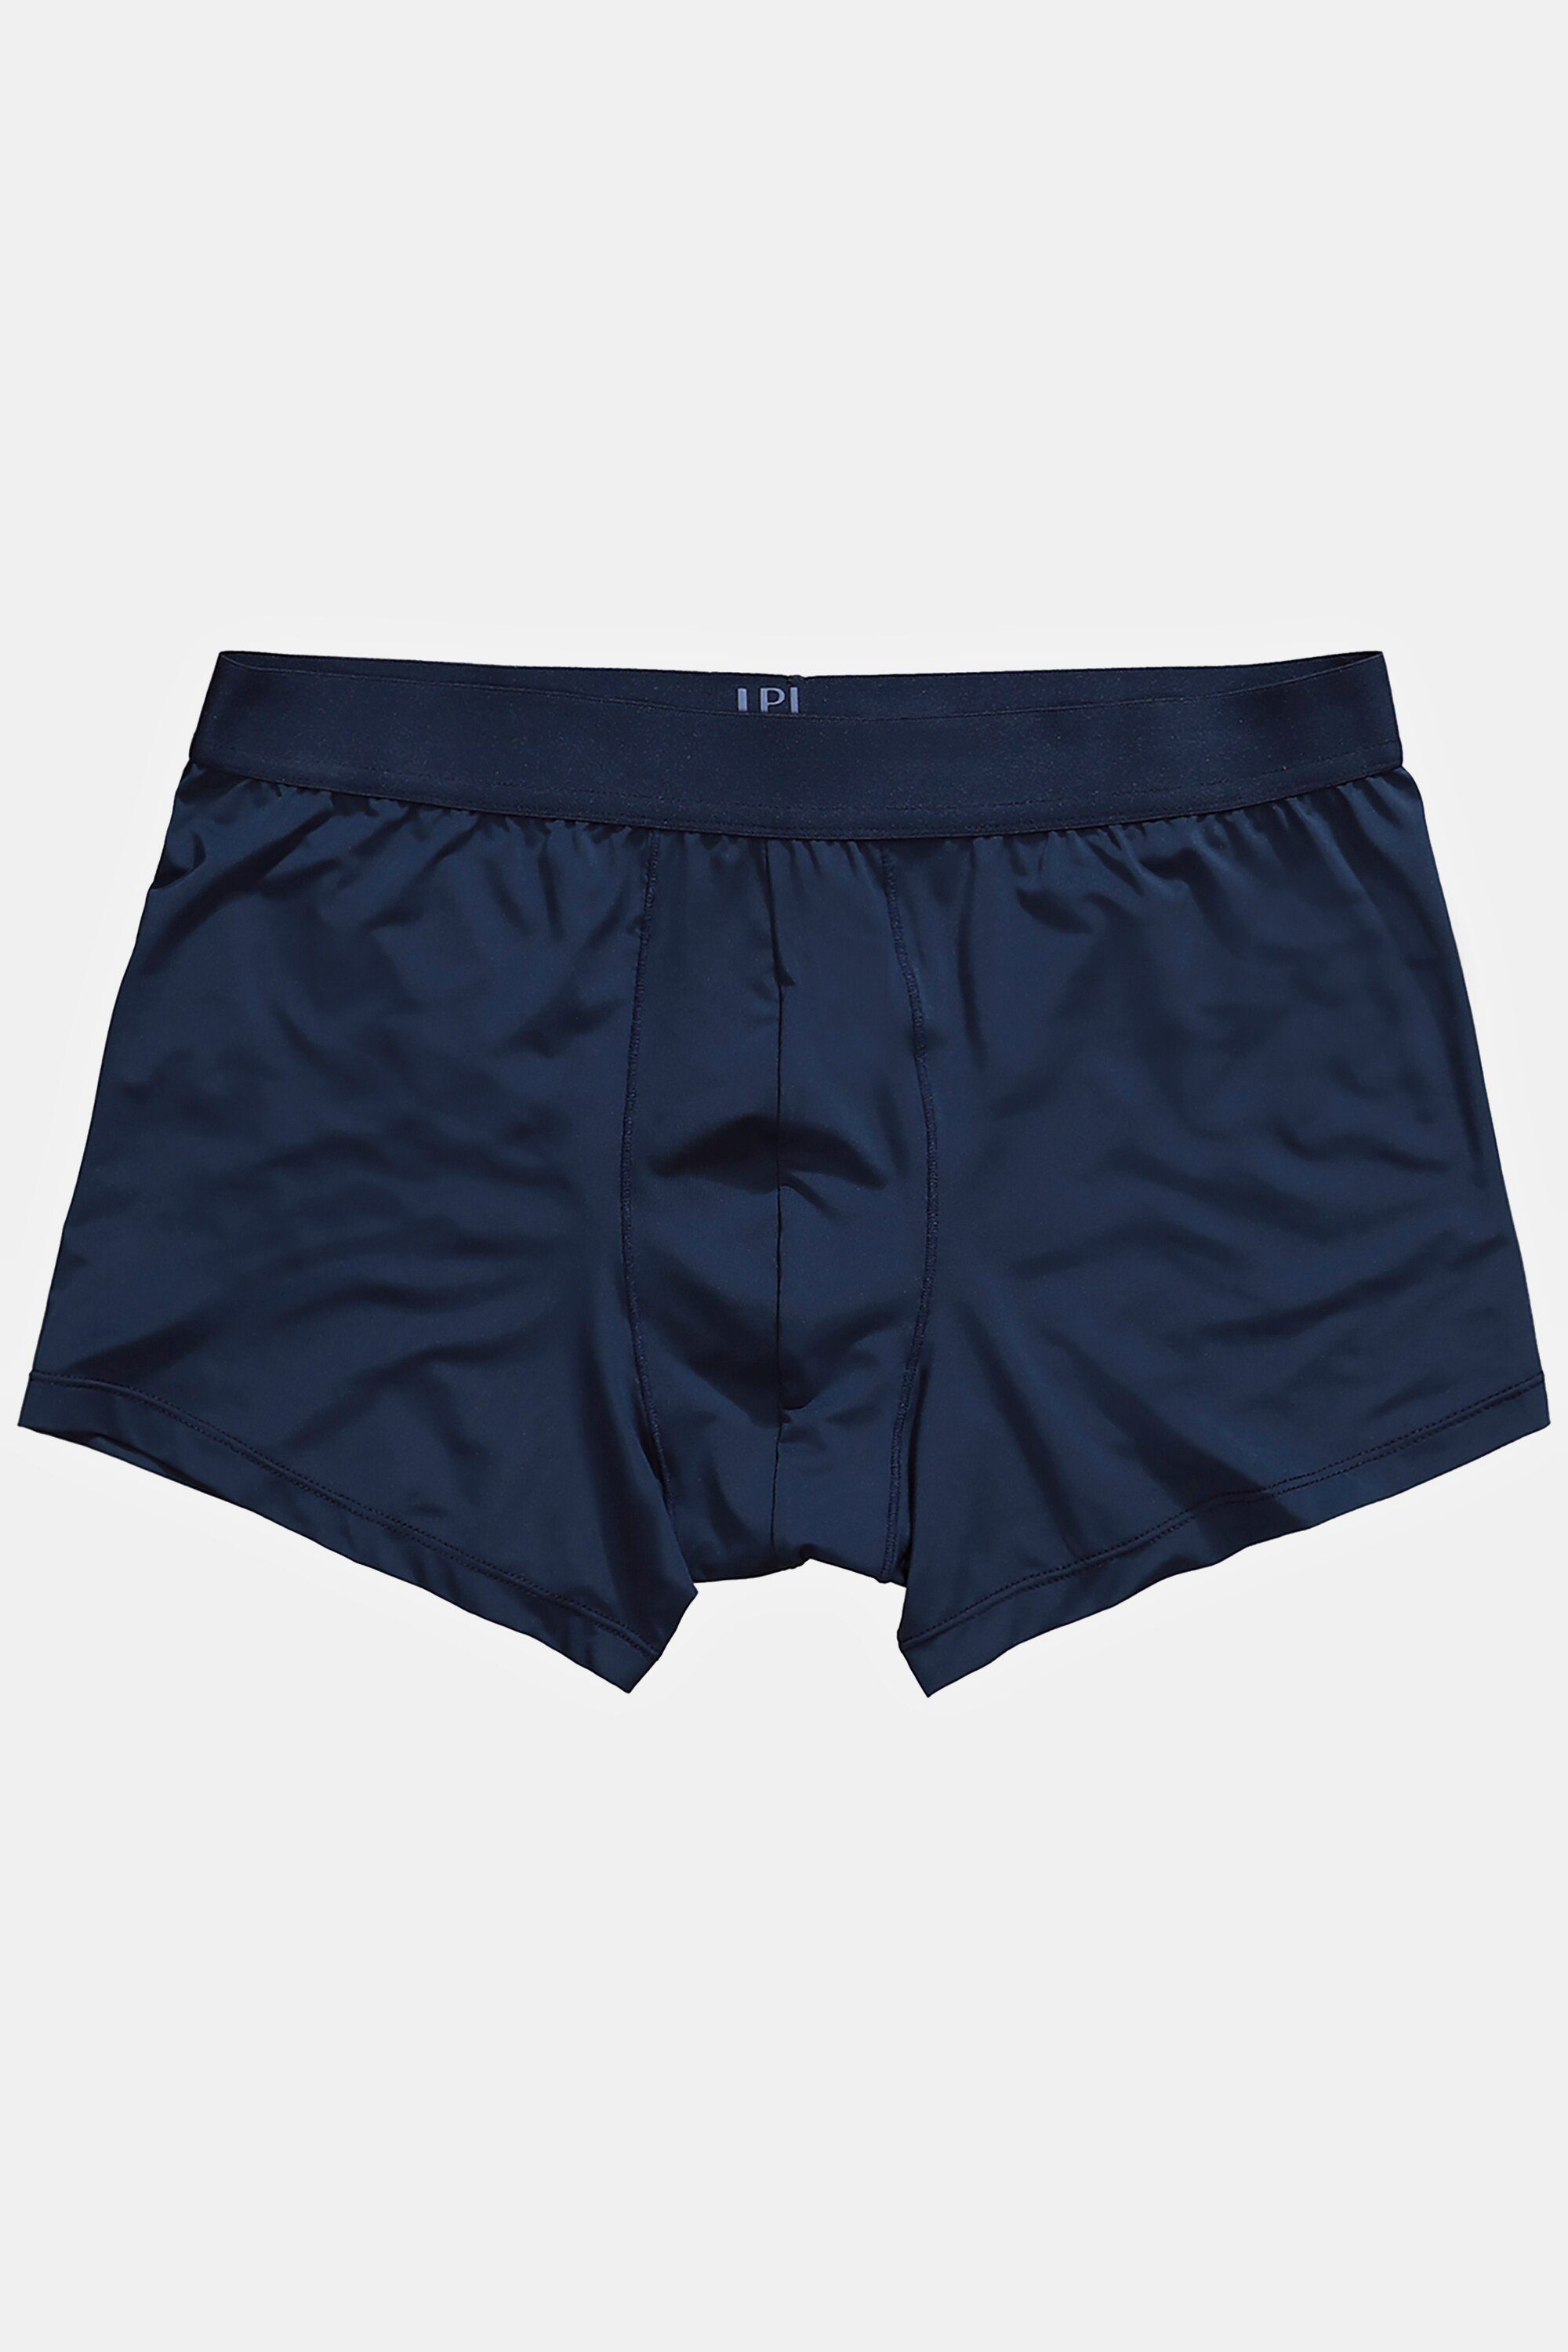 JP1880 Boxershorts navy Pant Fitness blau Unterhose